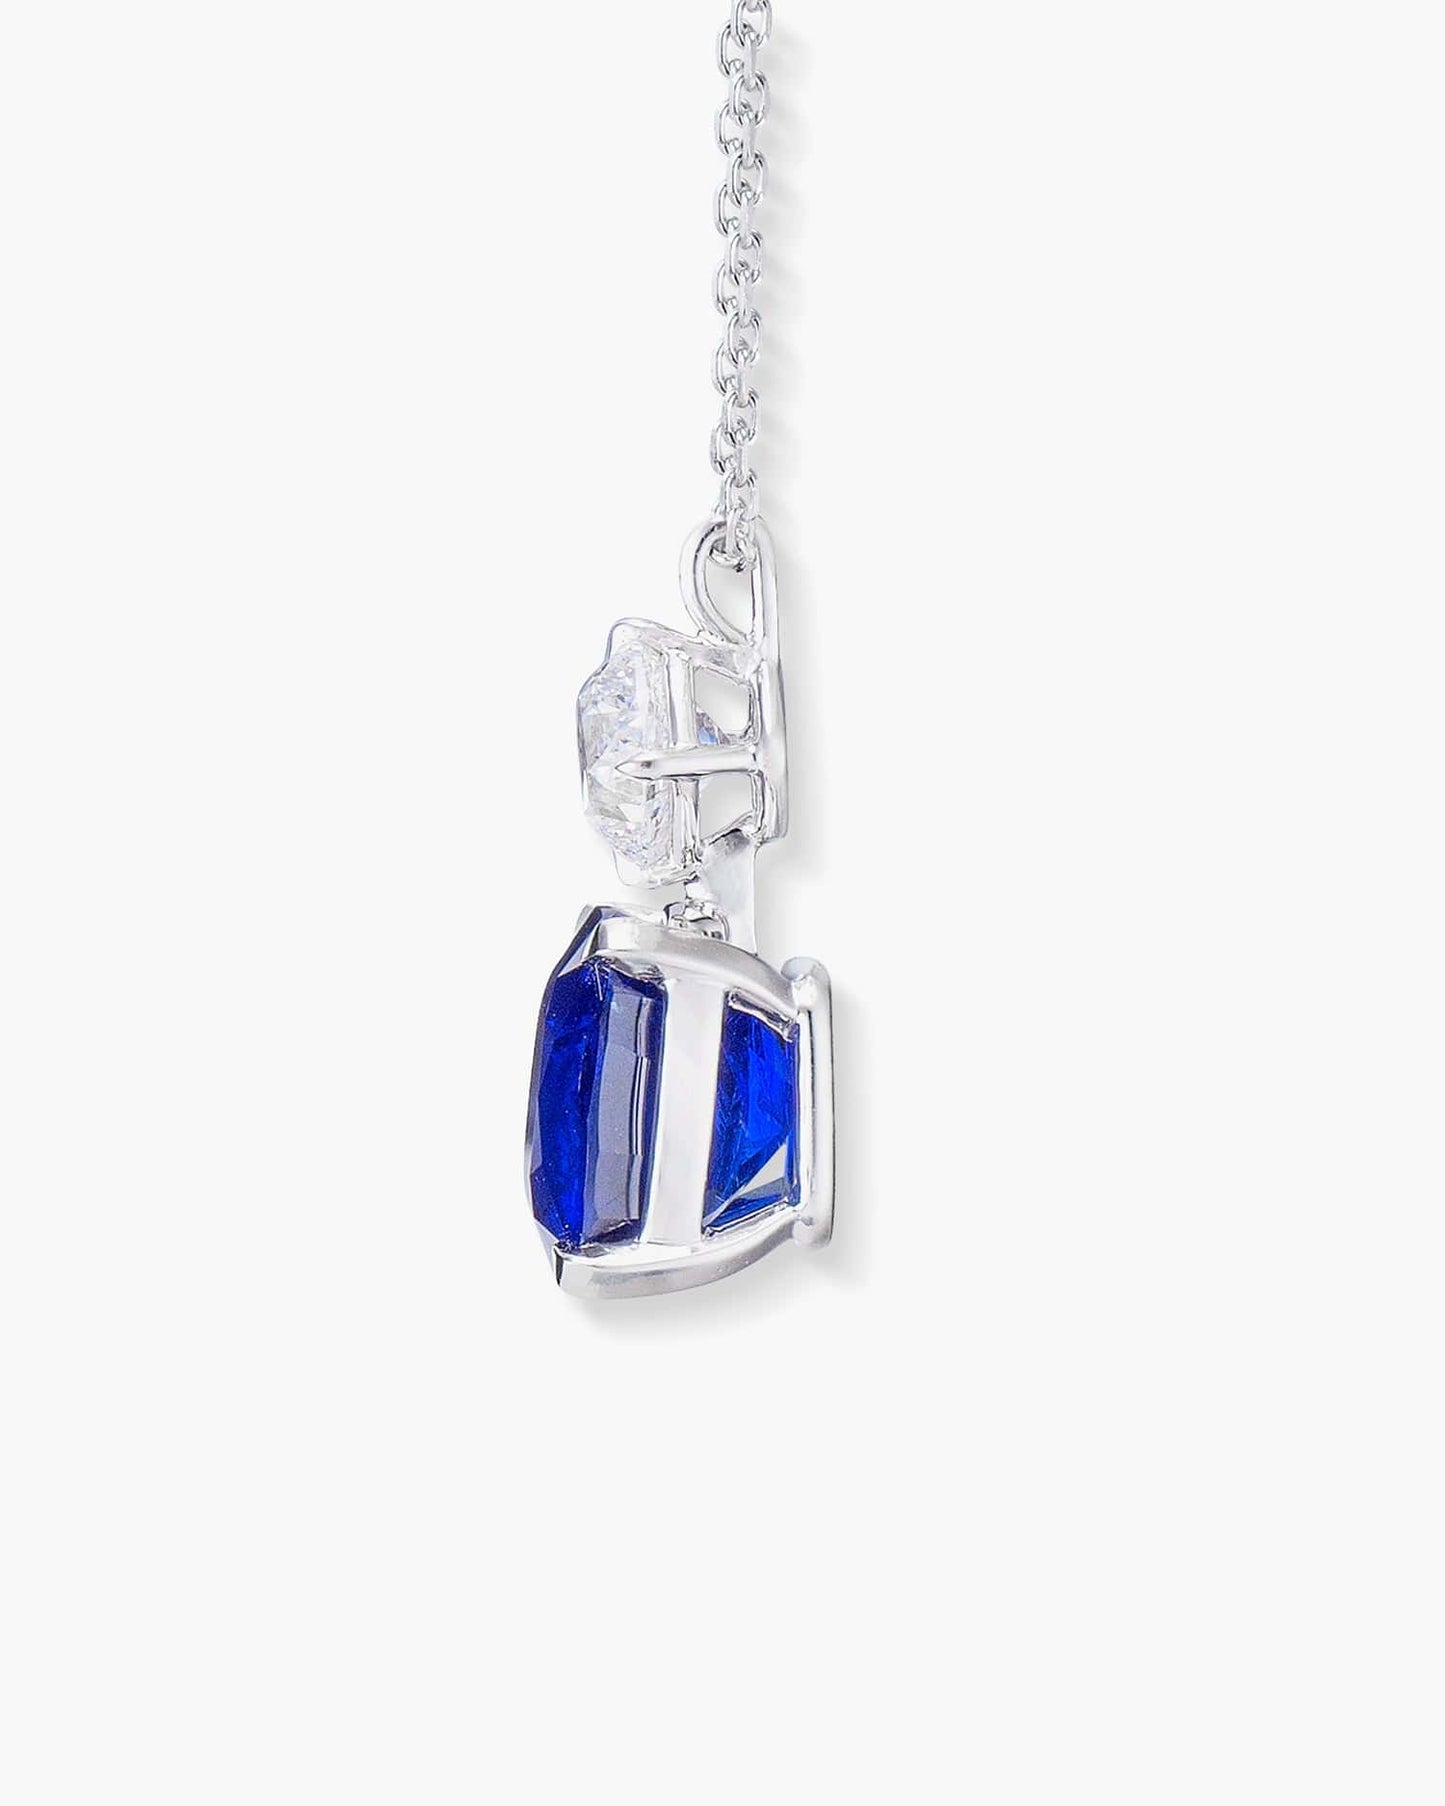 4.97 carat Cushion Cut Burmese Sapphire and Diamond Pendant Necklace